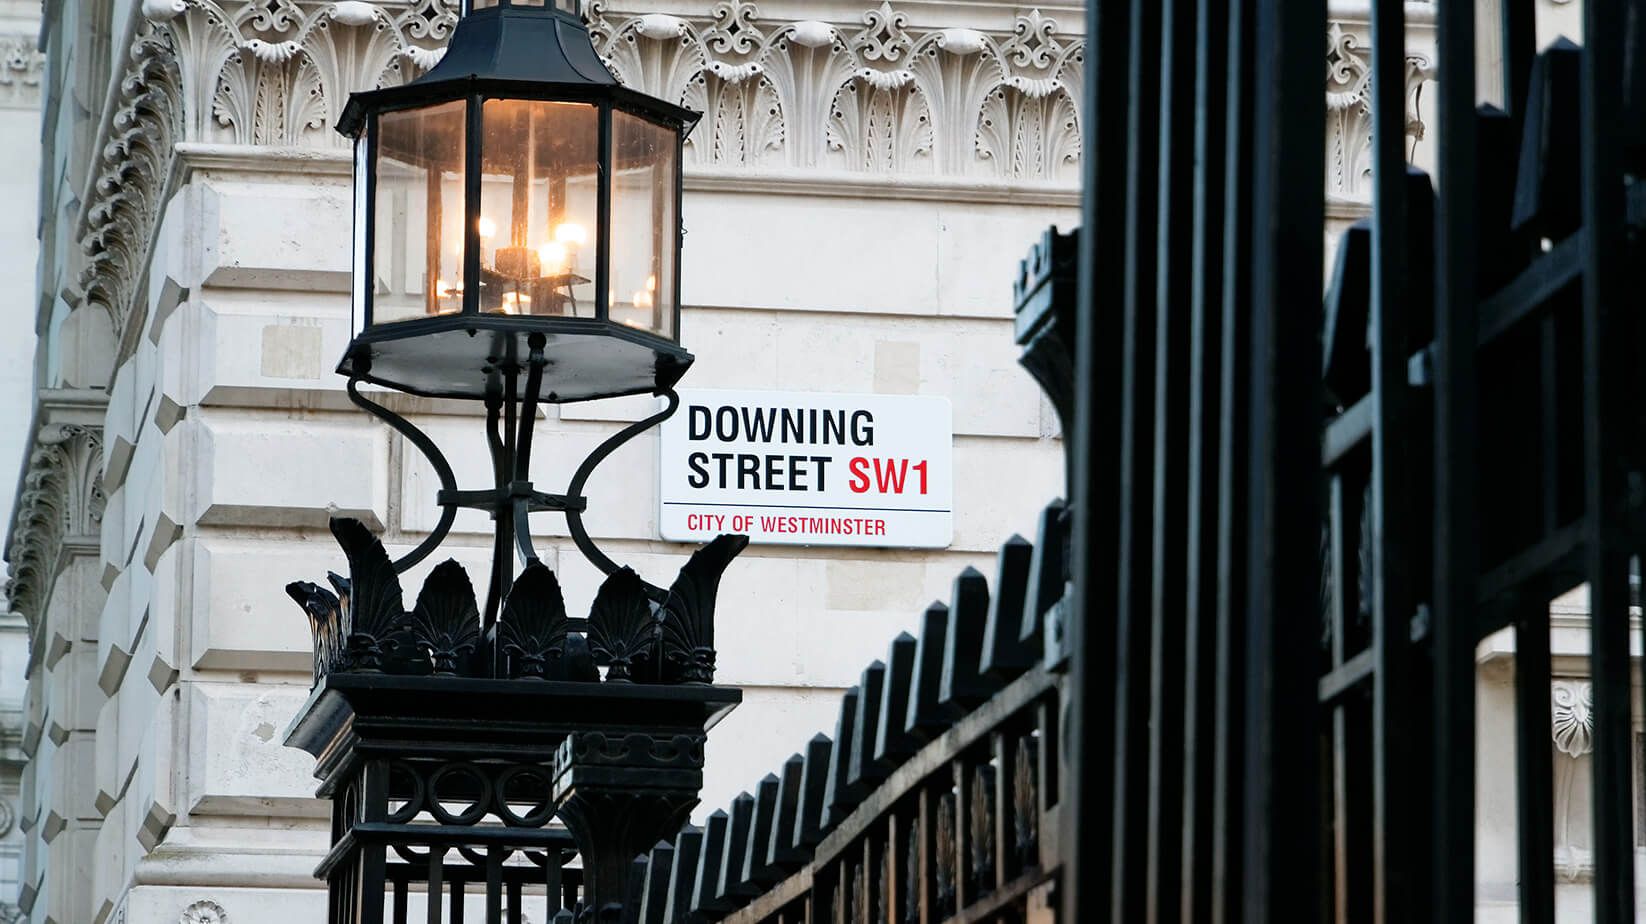 "Downing Street No.10 London", Tempat Tinggal PM Margareth Thatcher yang 2 Kali Membalas Suratku